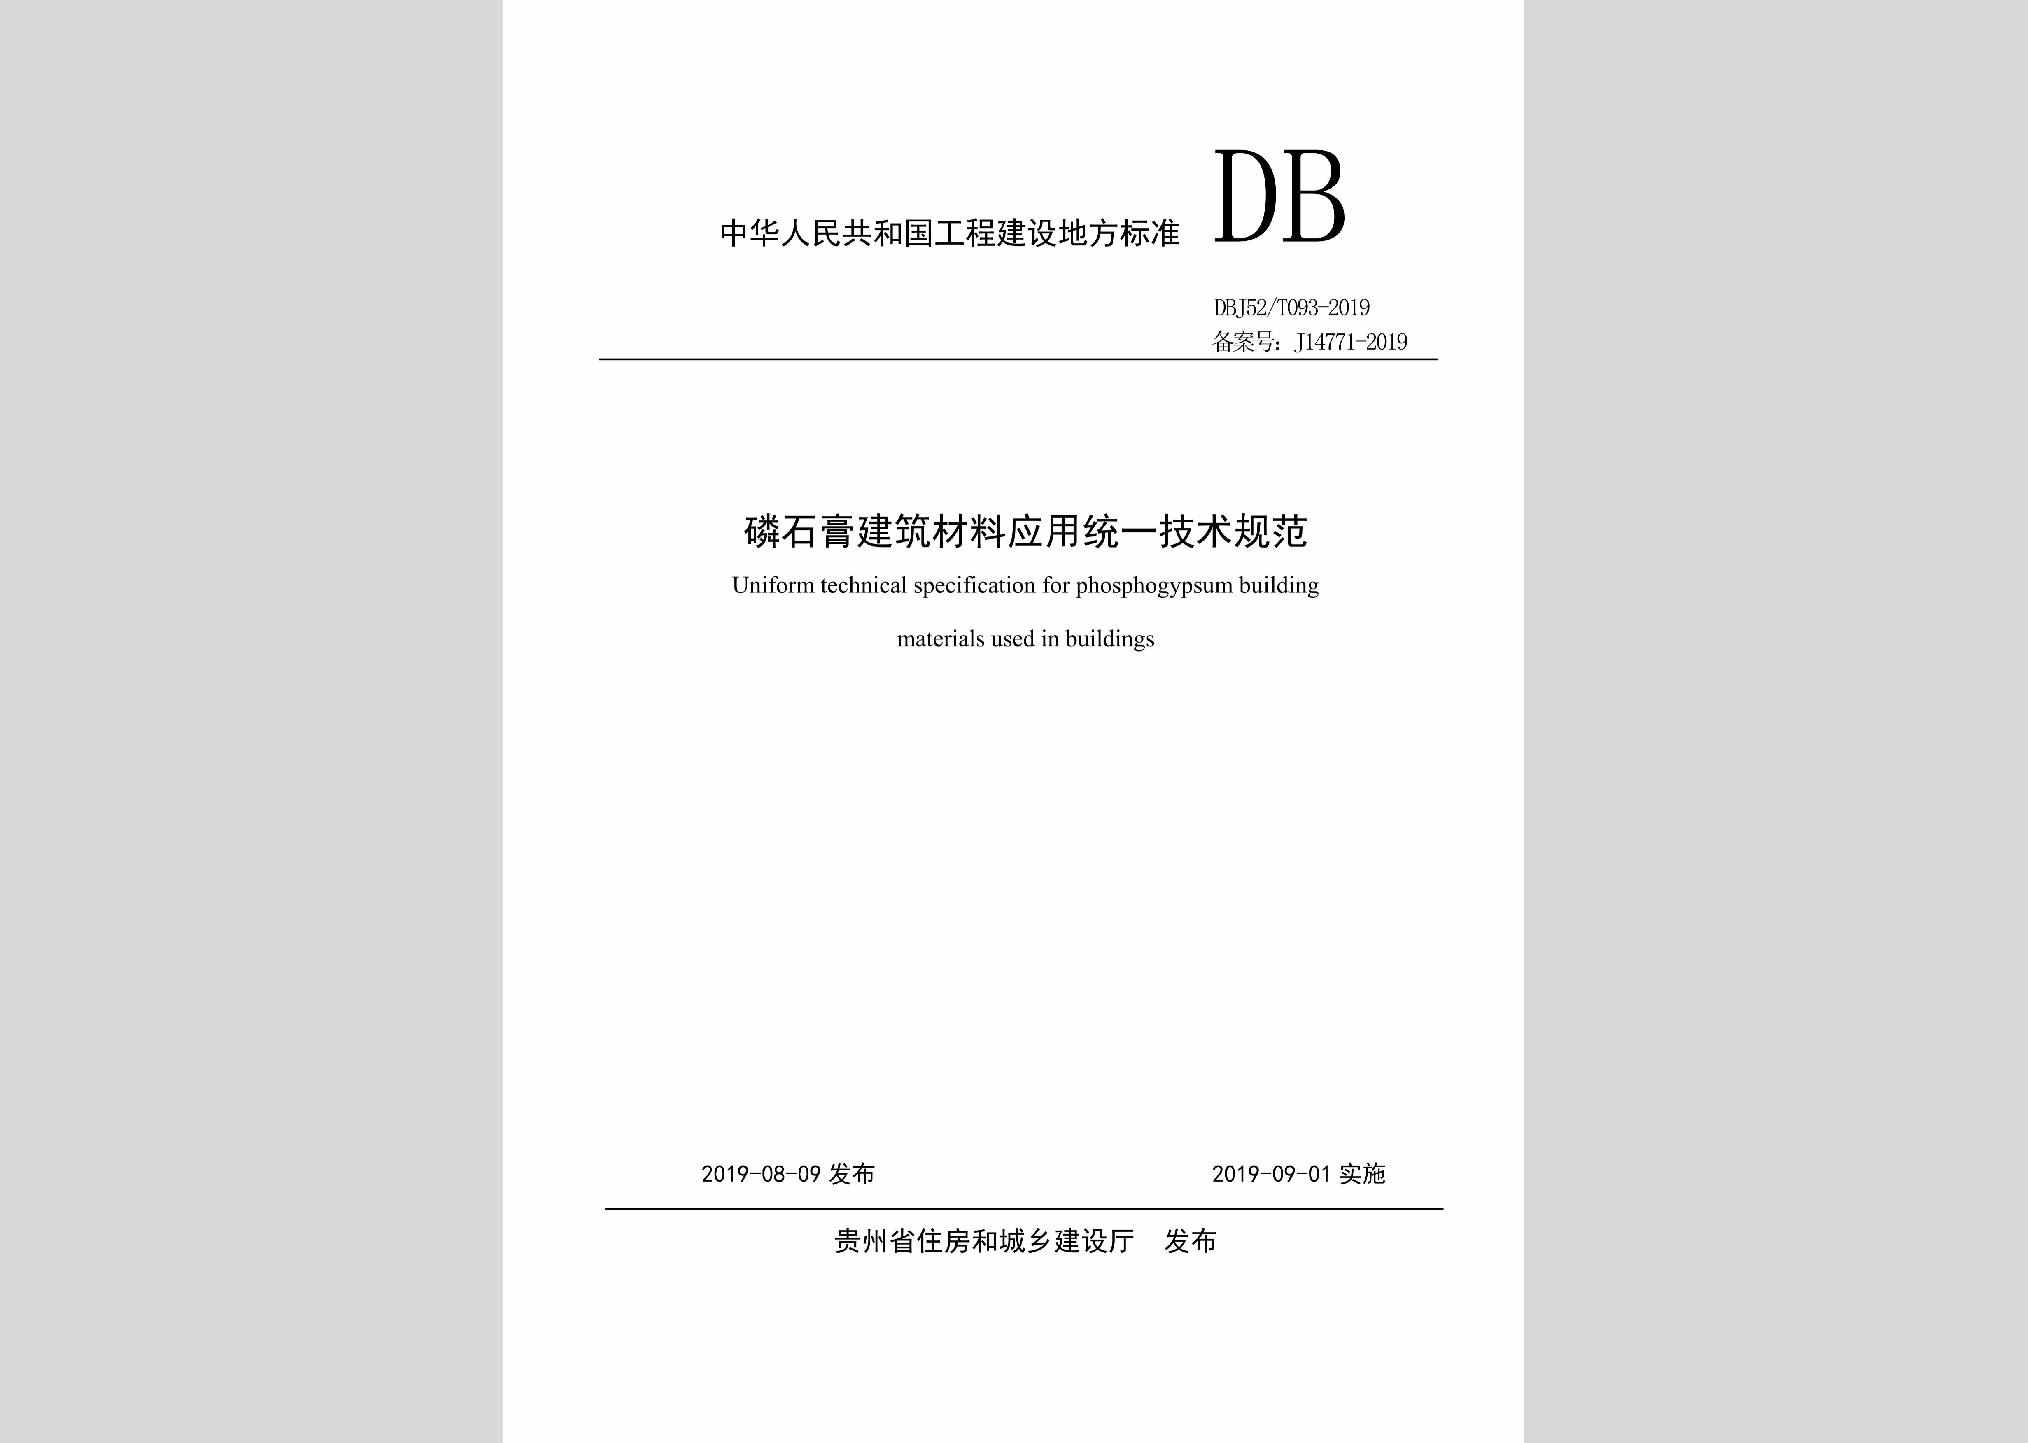 DBJ52/T093-2019：磷石膏建筑材料应用统一技术规范